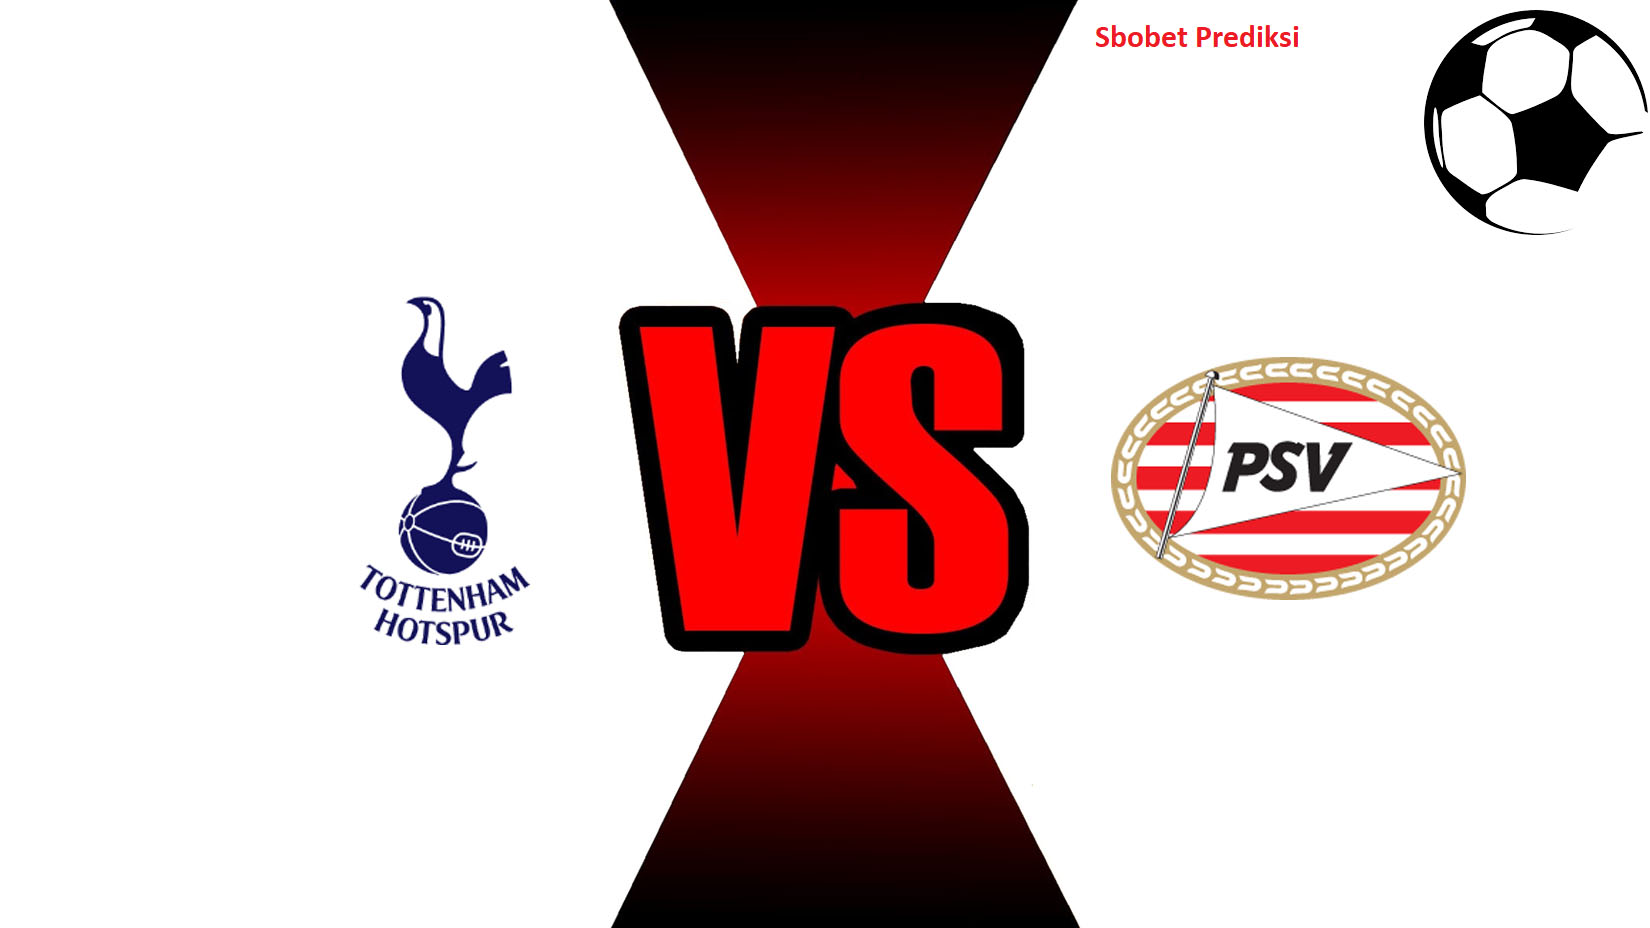 Prediksi Skor Bola Online Tottenham Hotspur vs PSV 7 November 2018